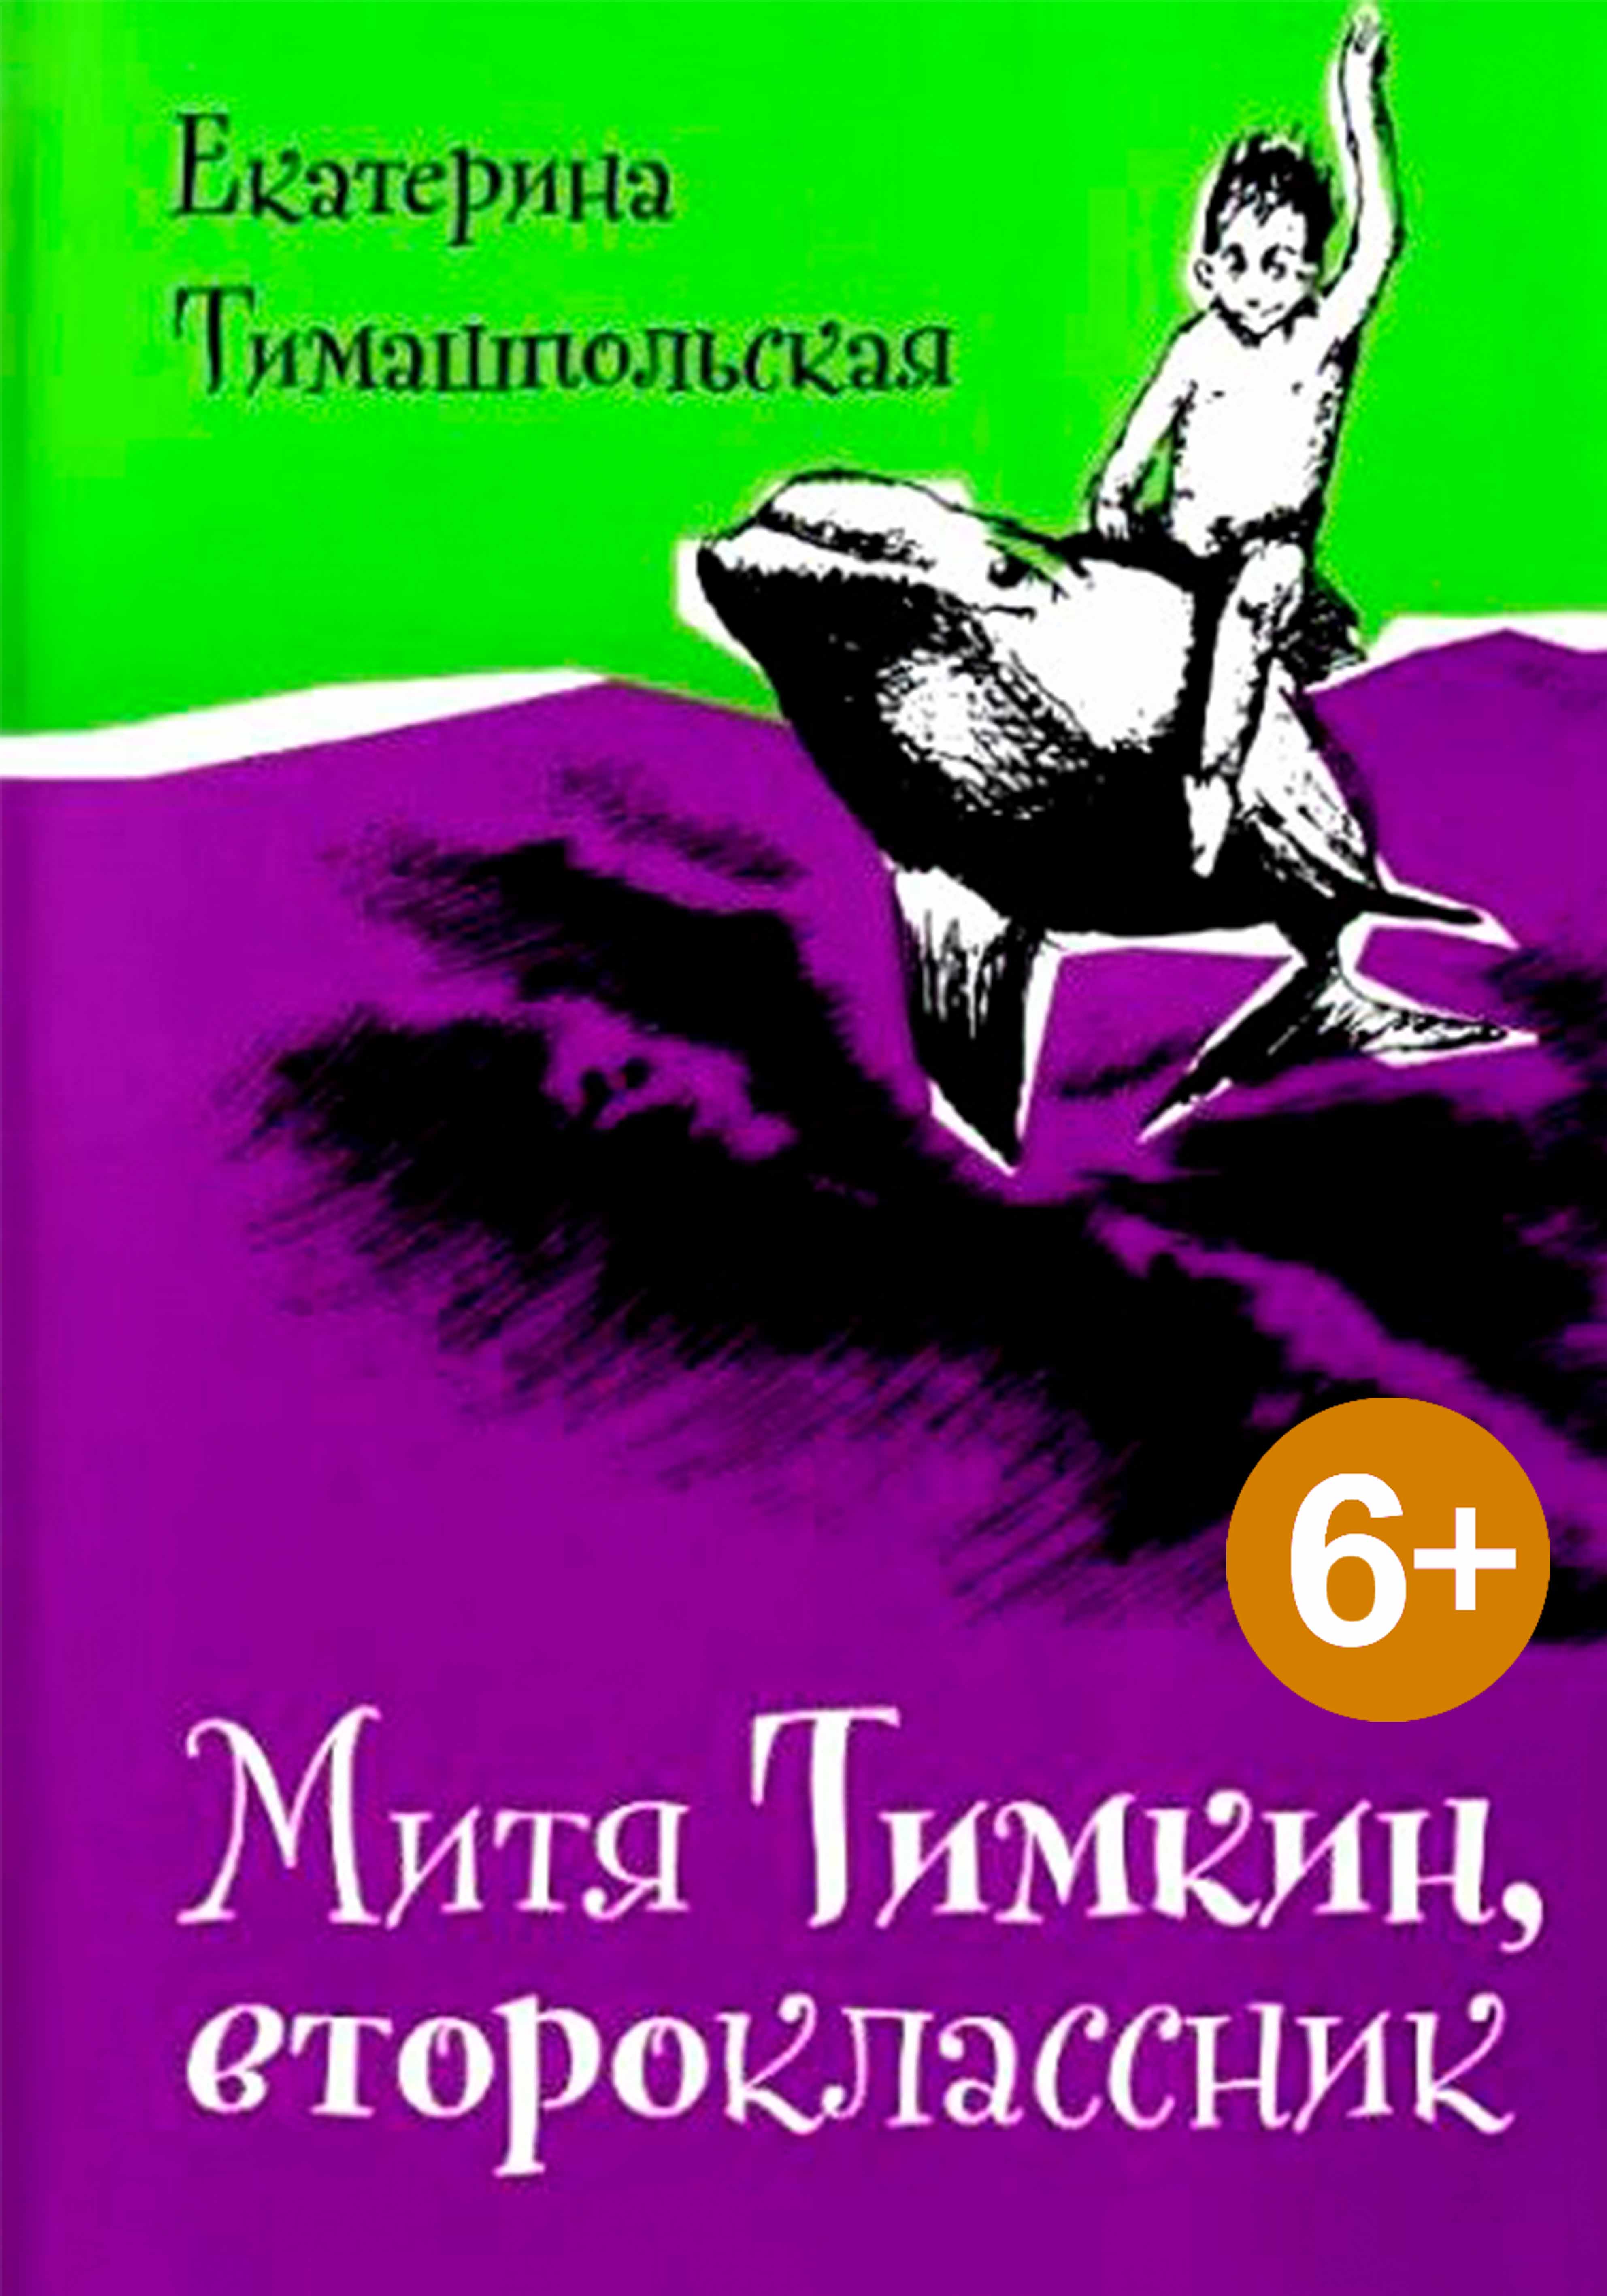 MAIN Timashpolskaya